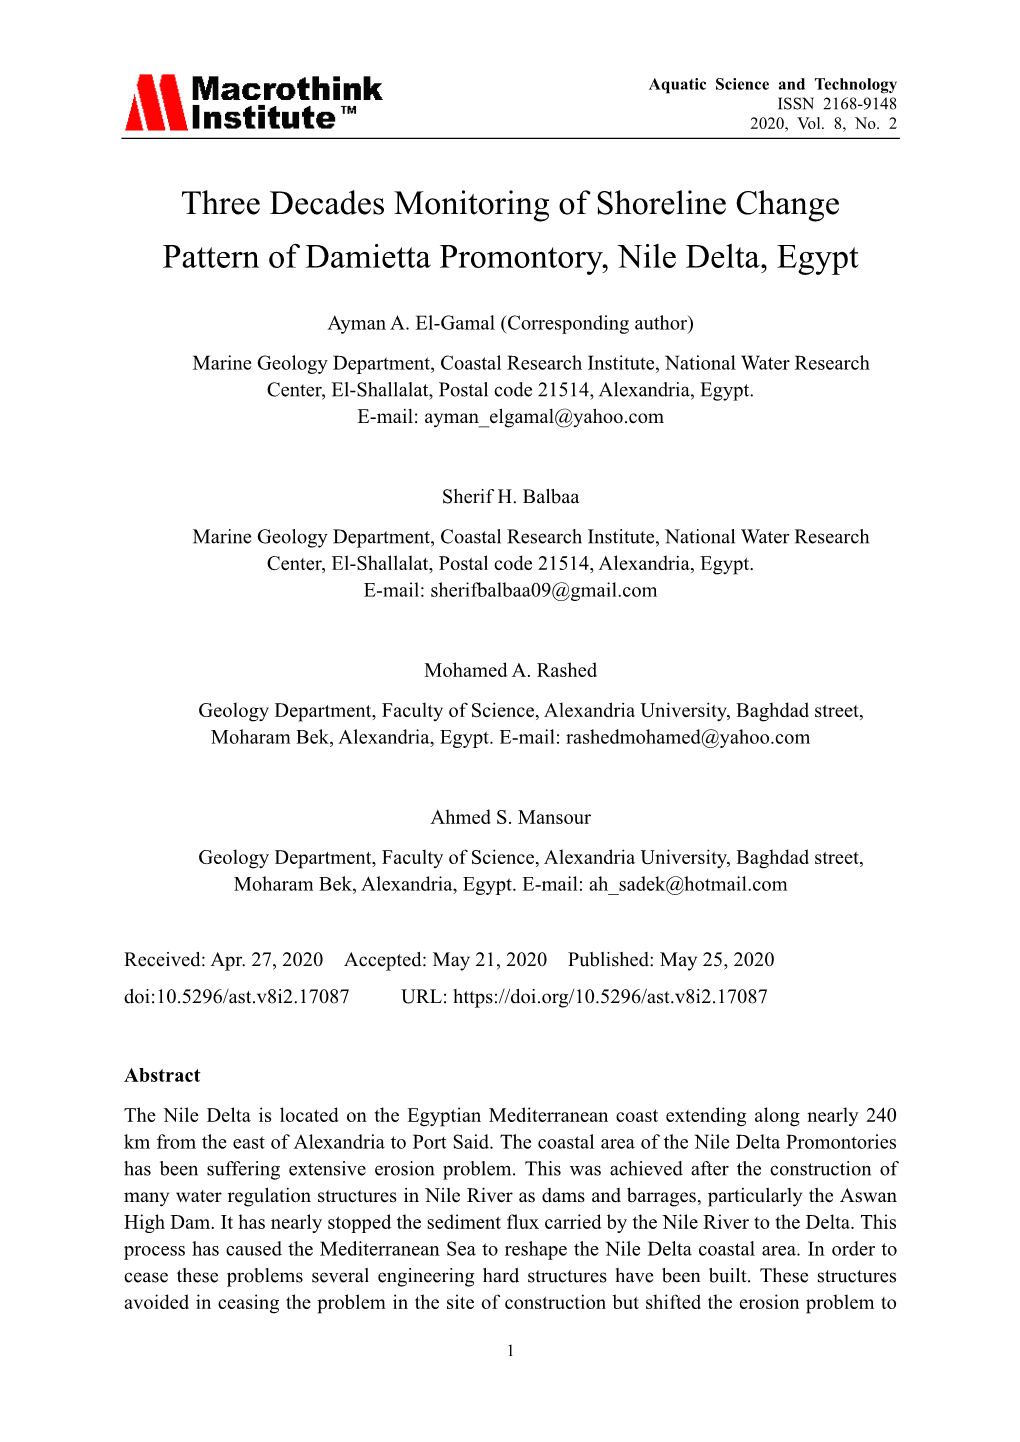 Three Decades Monitoring of Shoreline Change Pattern of Damietta Promontory, Nile Delta, Egypt